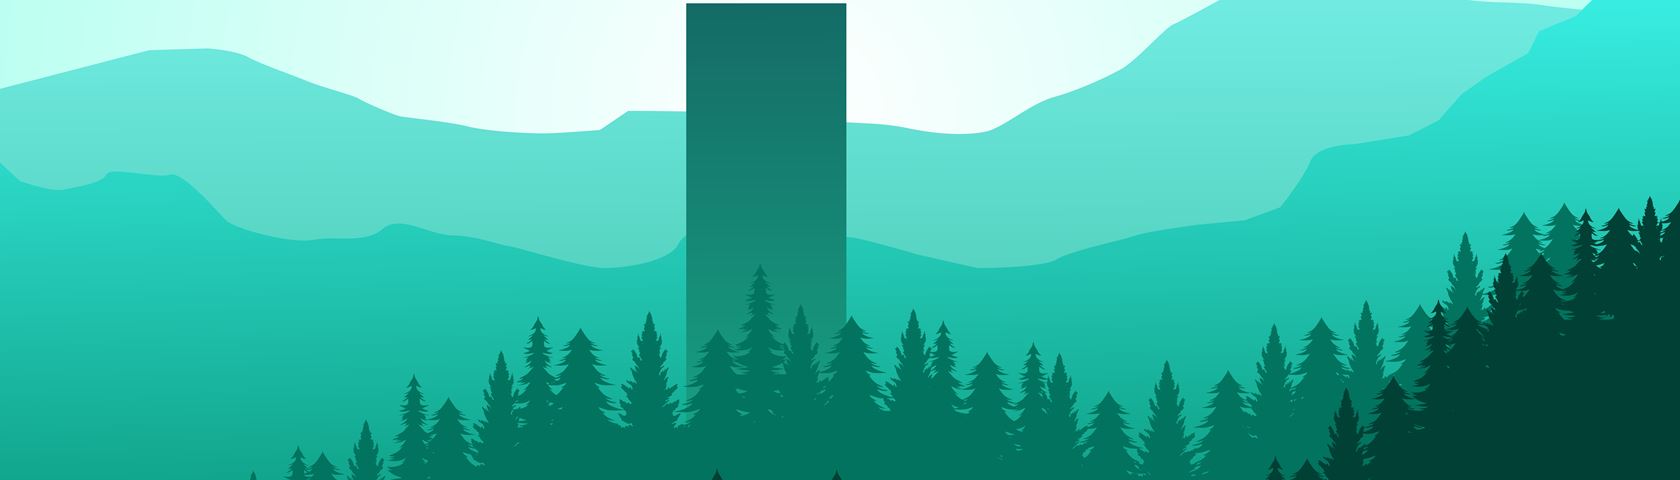 Flat Design Forest